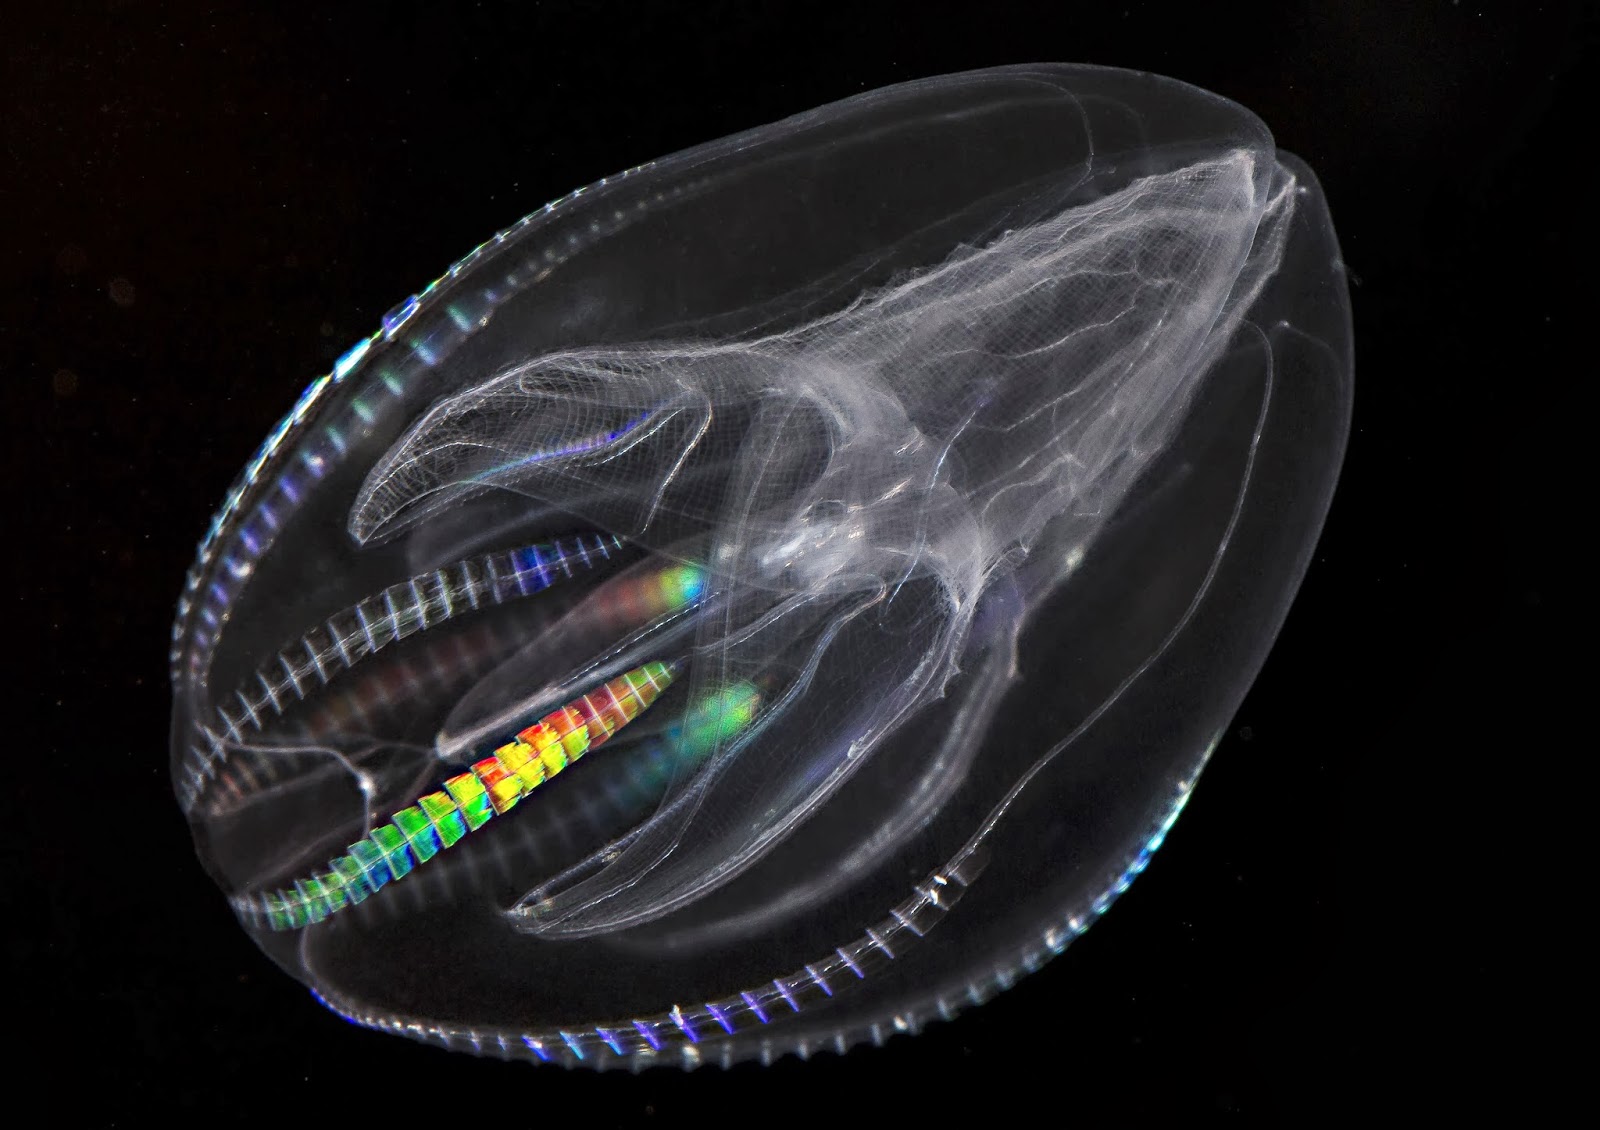 Aquatic comb jelly floats into new evolutionary position